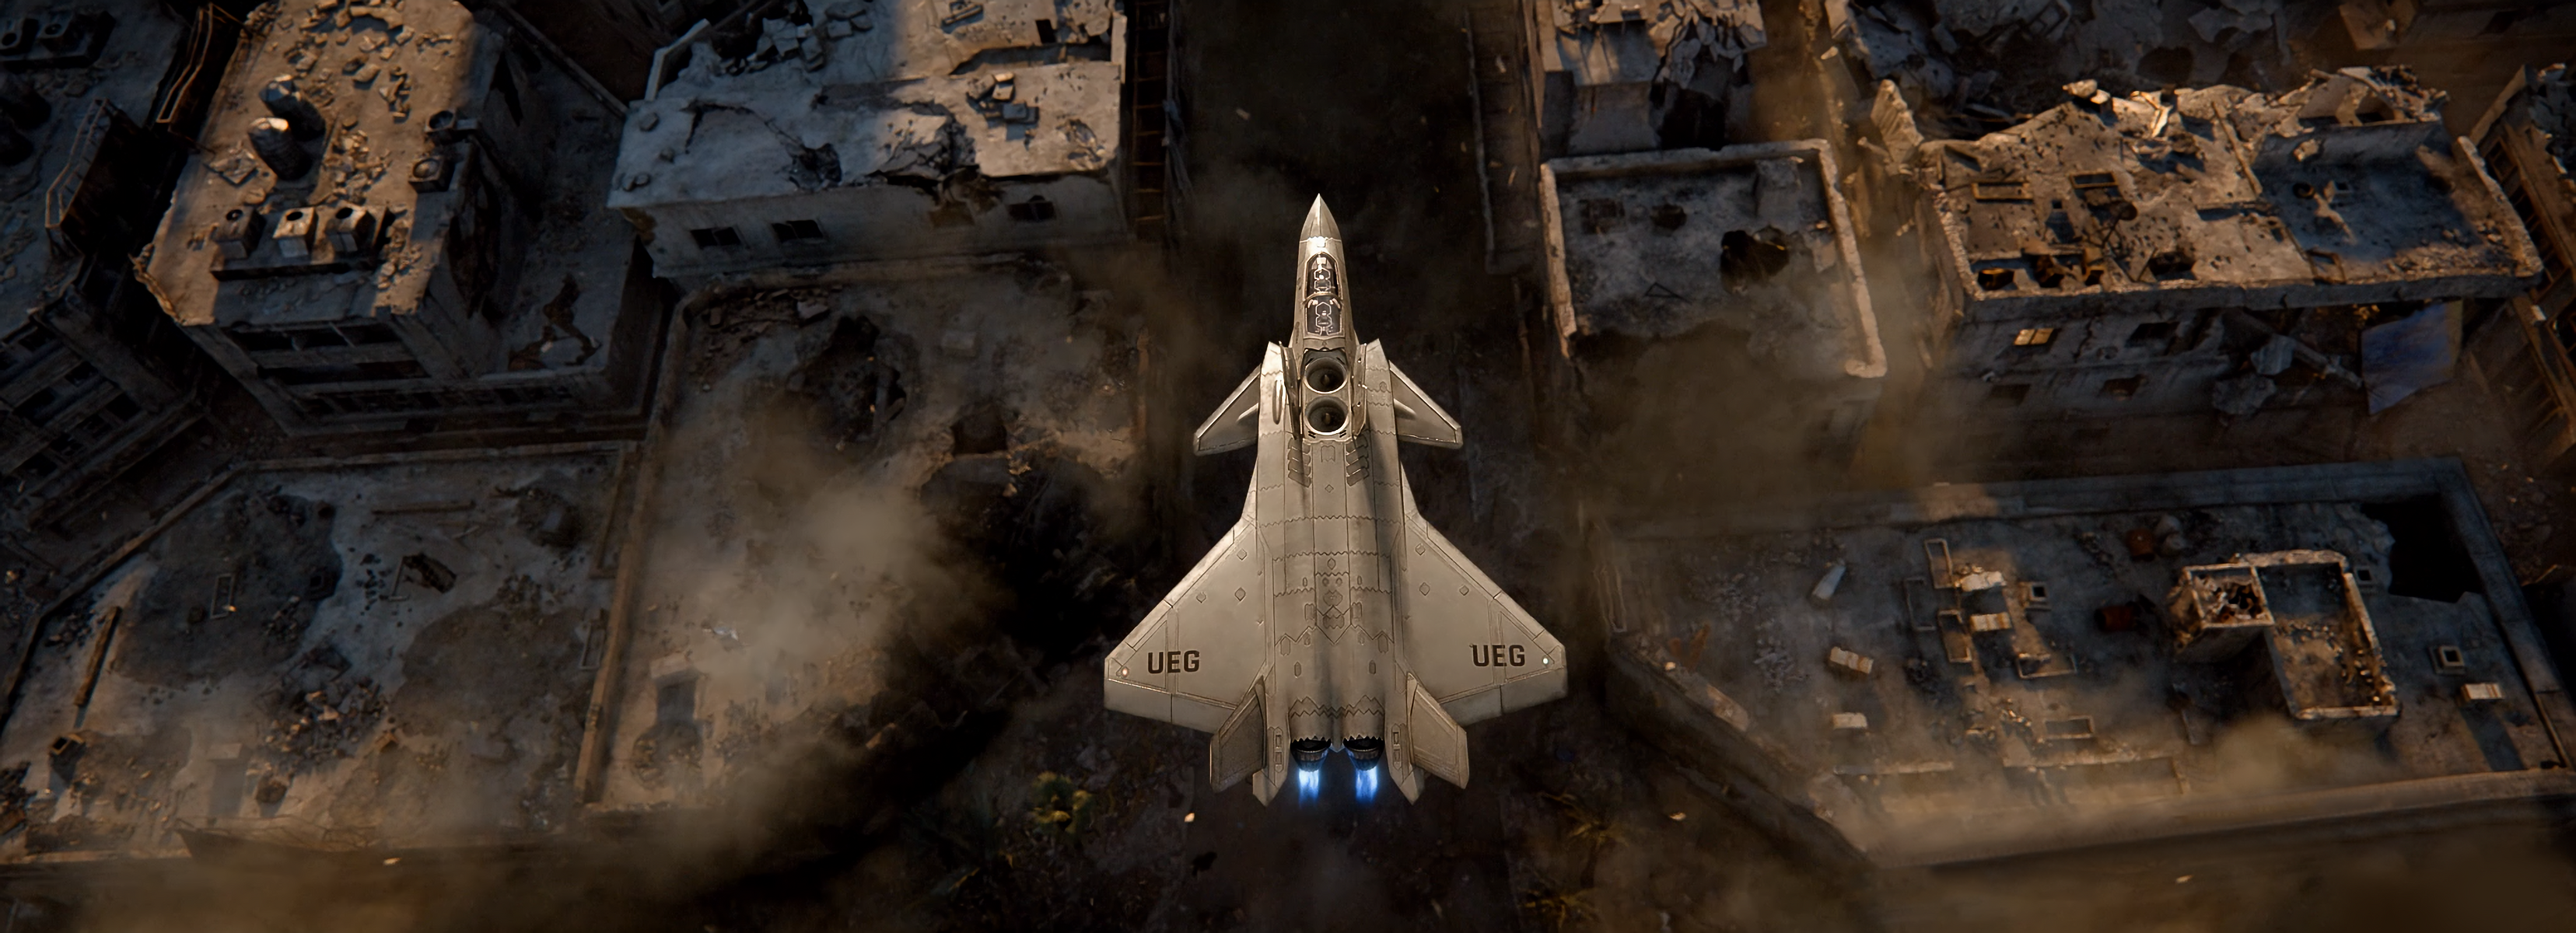 The Wandering Earth 2 Science Fiction Film Stills Aircraft Destruction 3312x1200